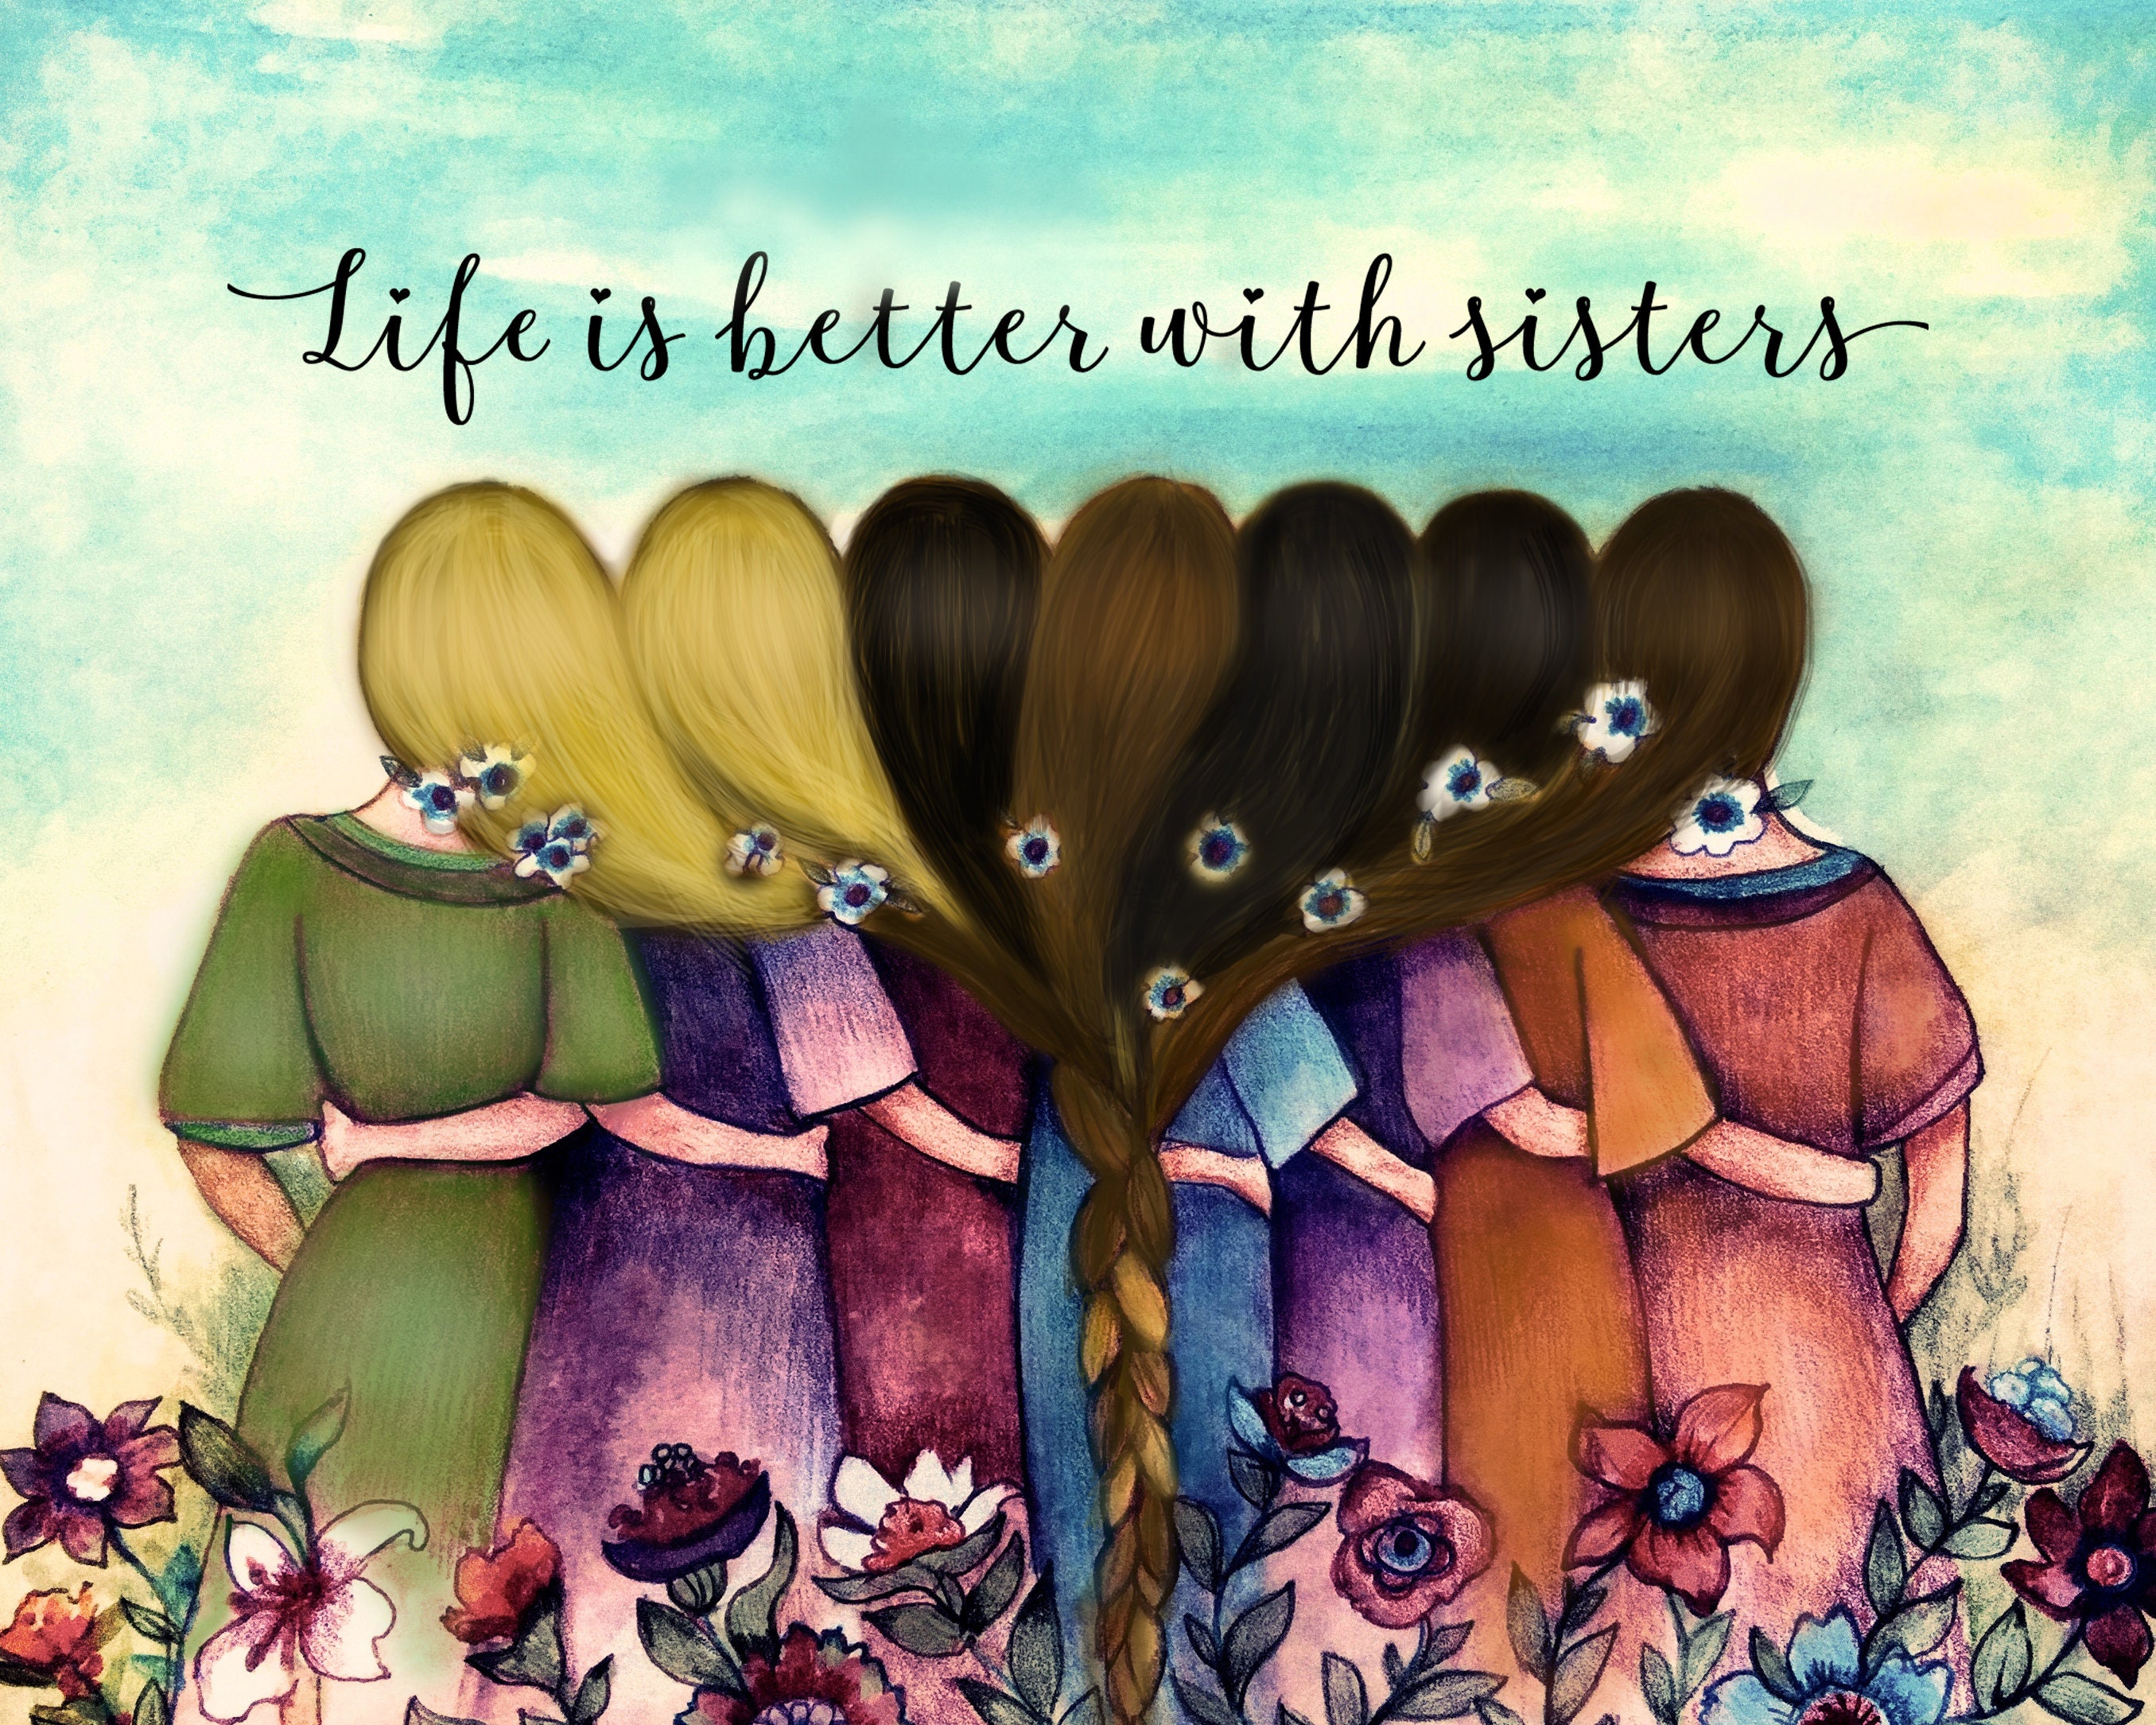 Regalo de hermana a hermana / regalo para amiga / cabello imagen imagen